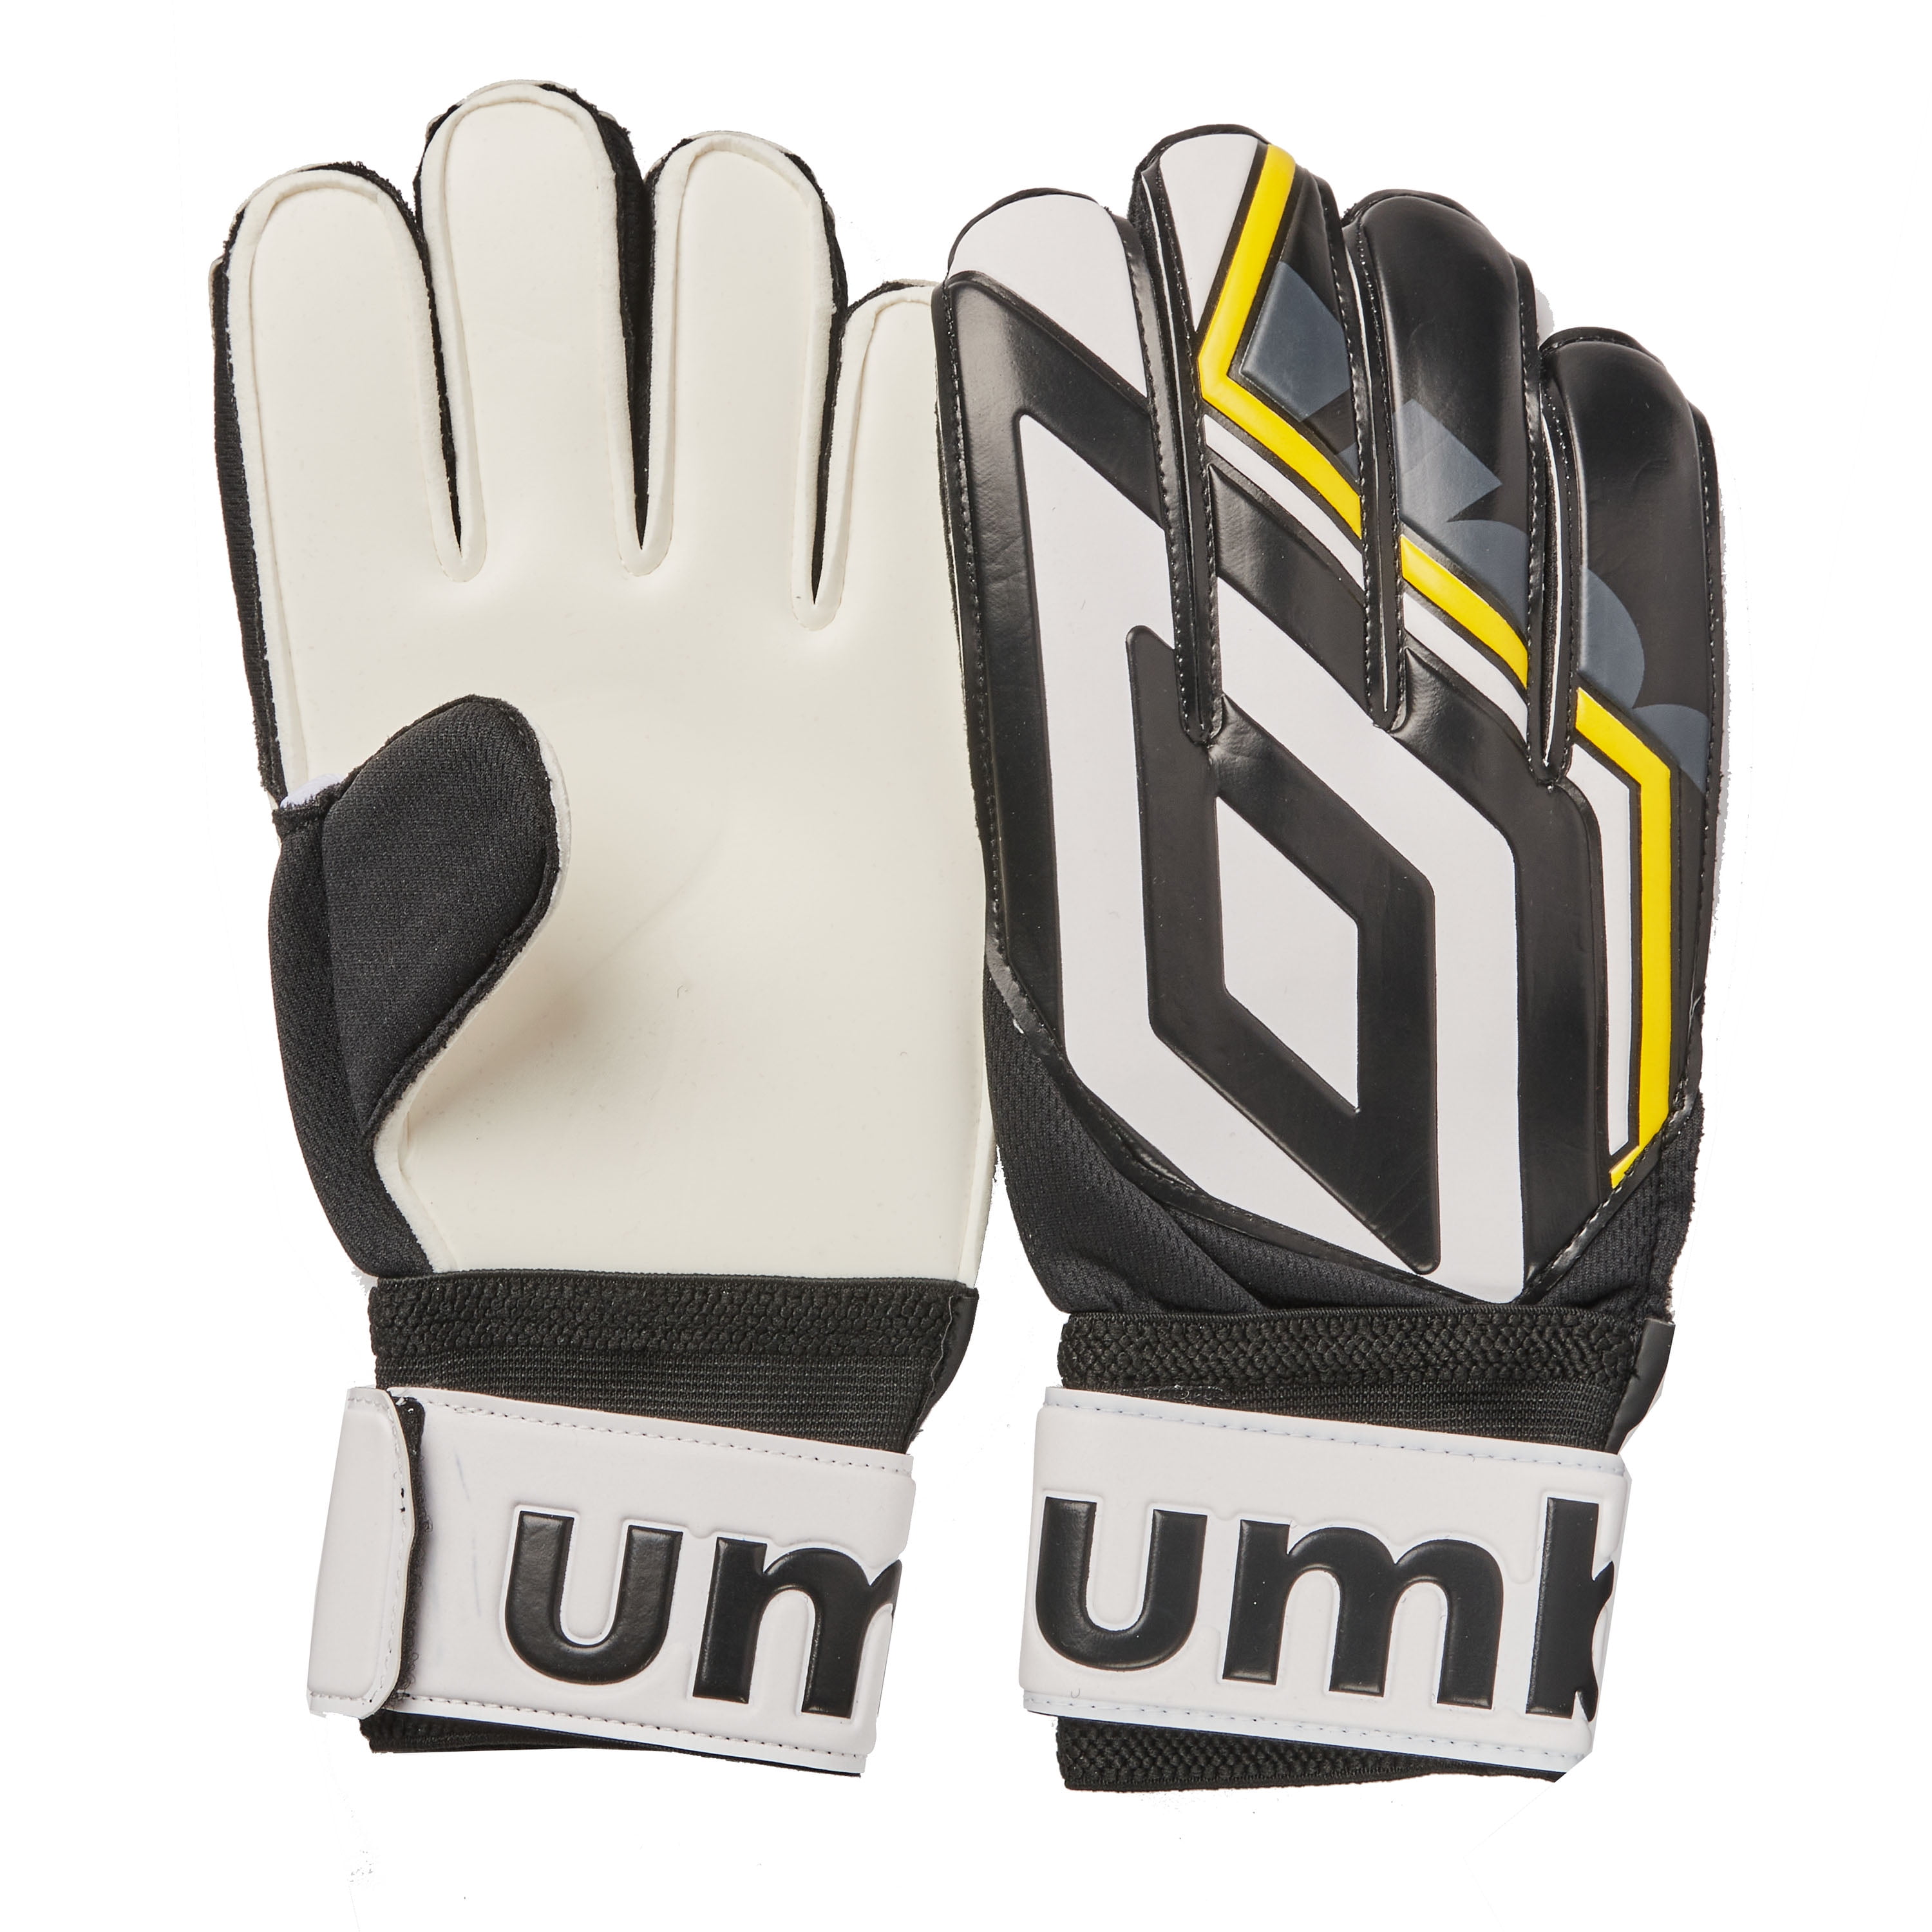 Artistiek woede smaak Umbro Adult Soccer Goalie Gloves, Black and White - Walmart.com